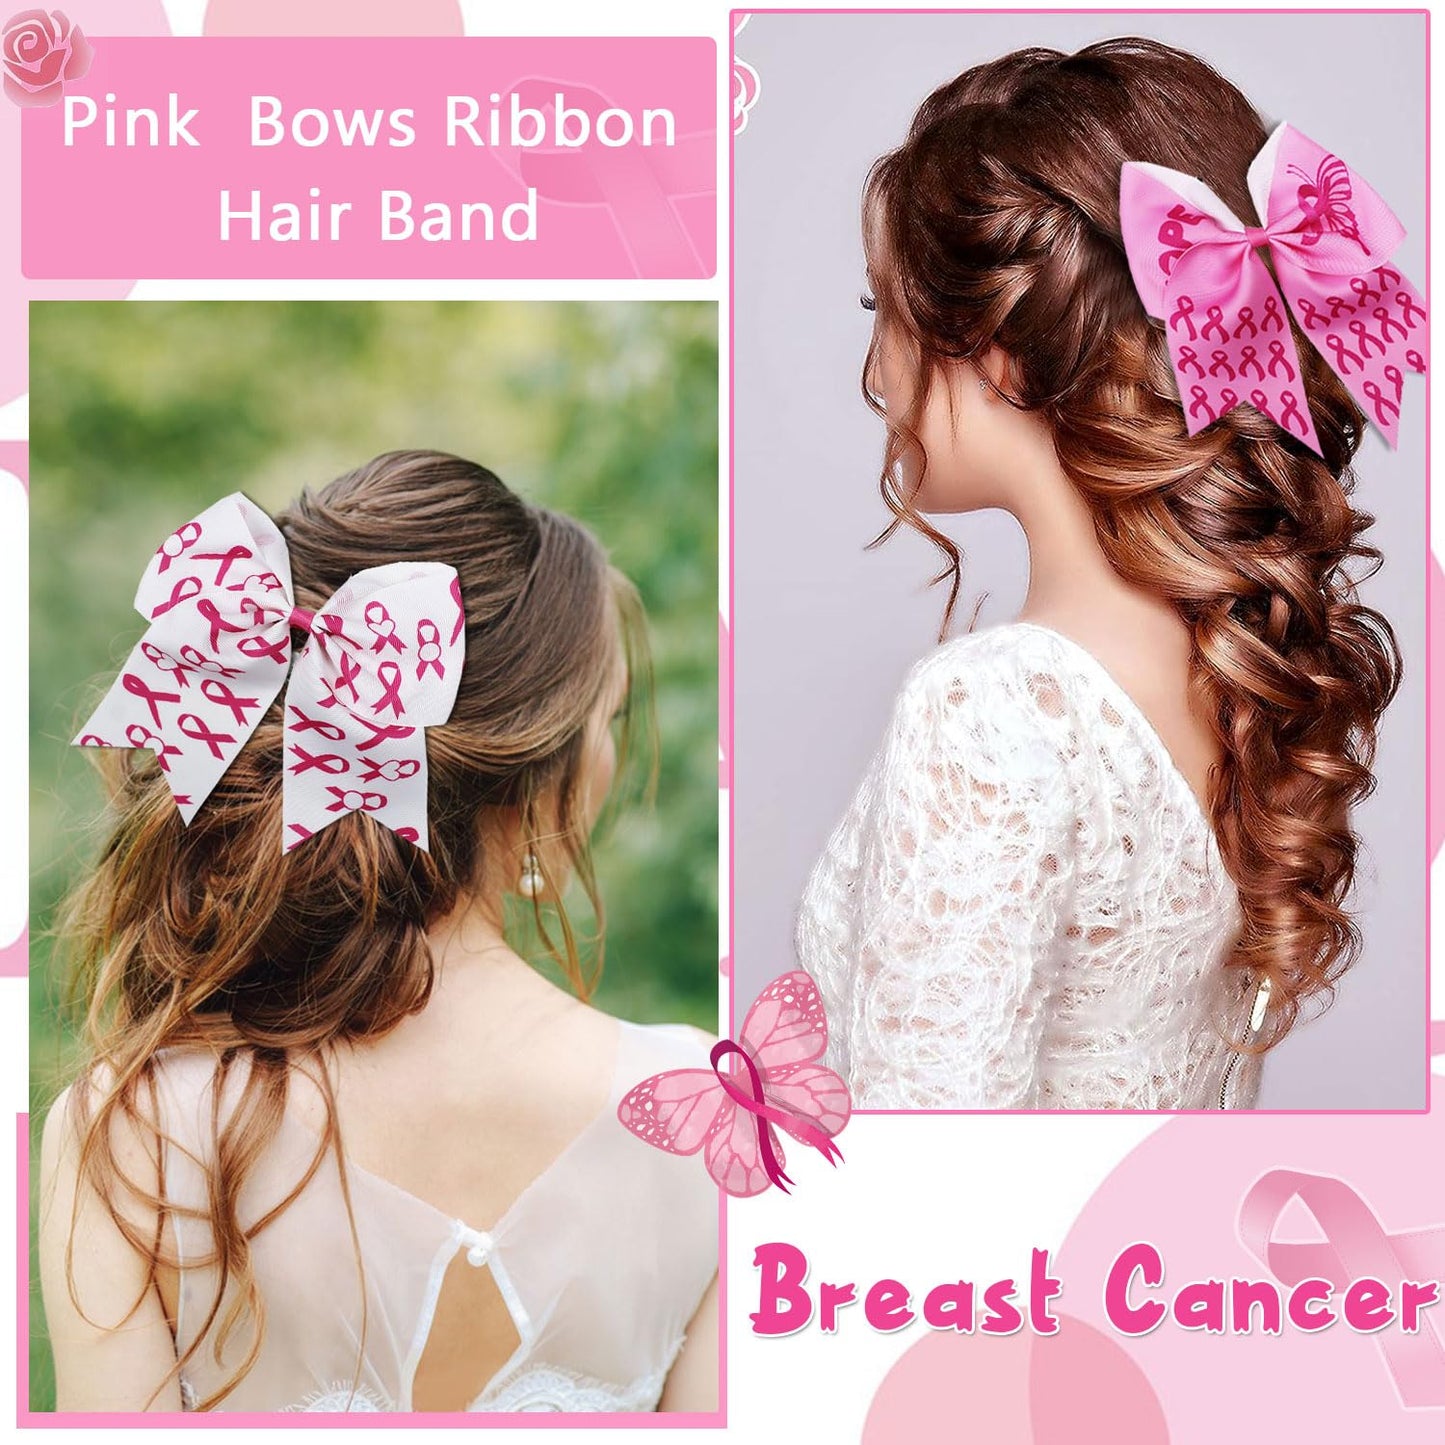 2 Pcs Breast Cancer Awareness Cheer Hair Bows Pink Ribbon Hair Ties for Women Girls White Pink Elastics Hair Bands Bow Hair Rope Hair Scarf Scrunchies Ponytail Holder Hair Accessories